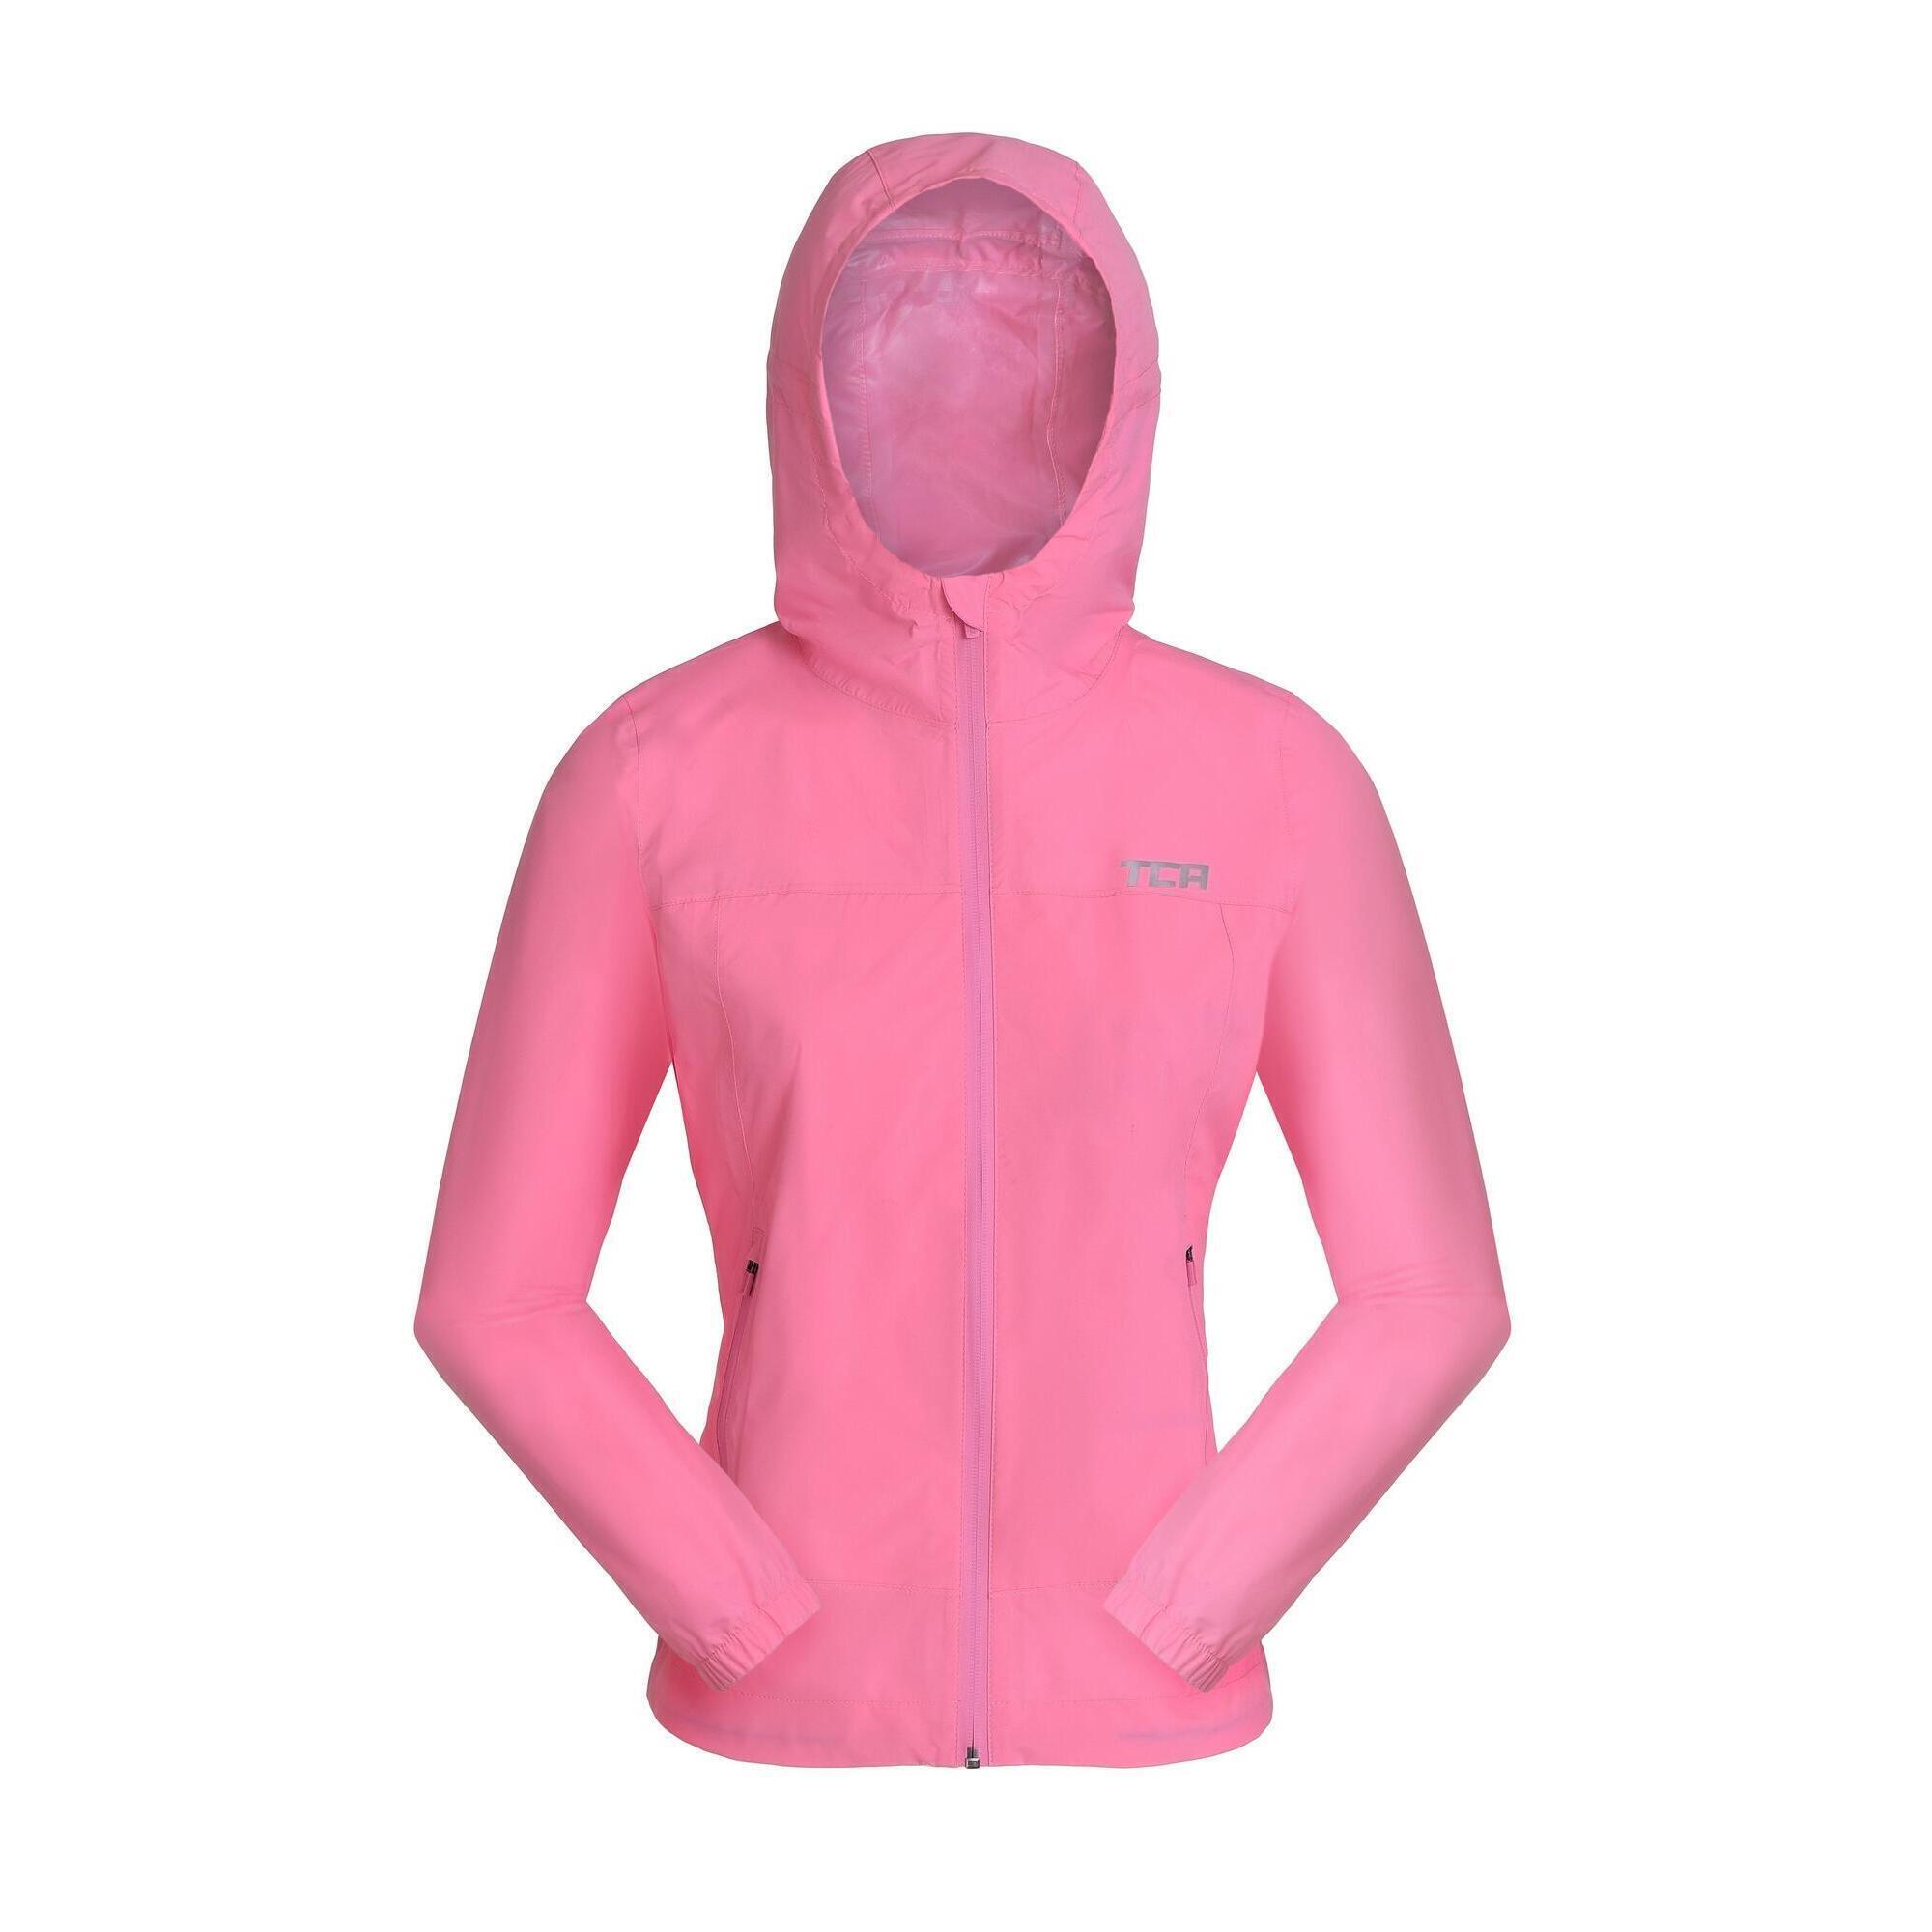 TCA Girls' AirLite Rain Jacket with Zip Pockets - Sachet Pink